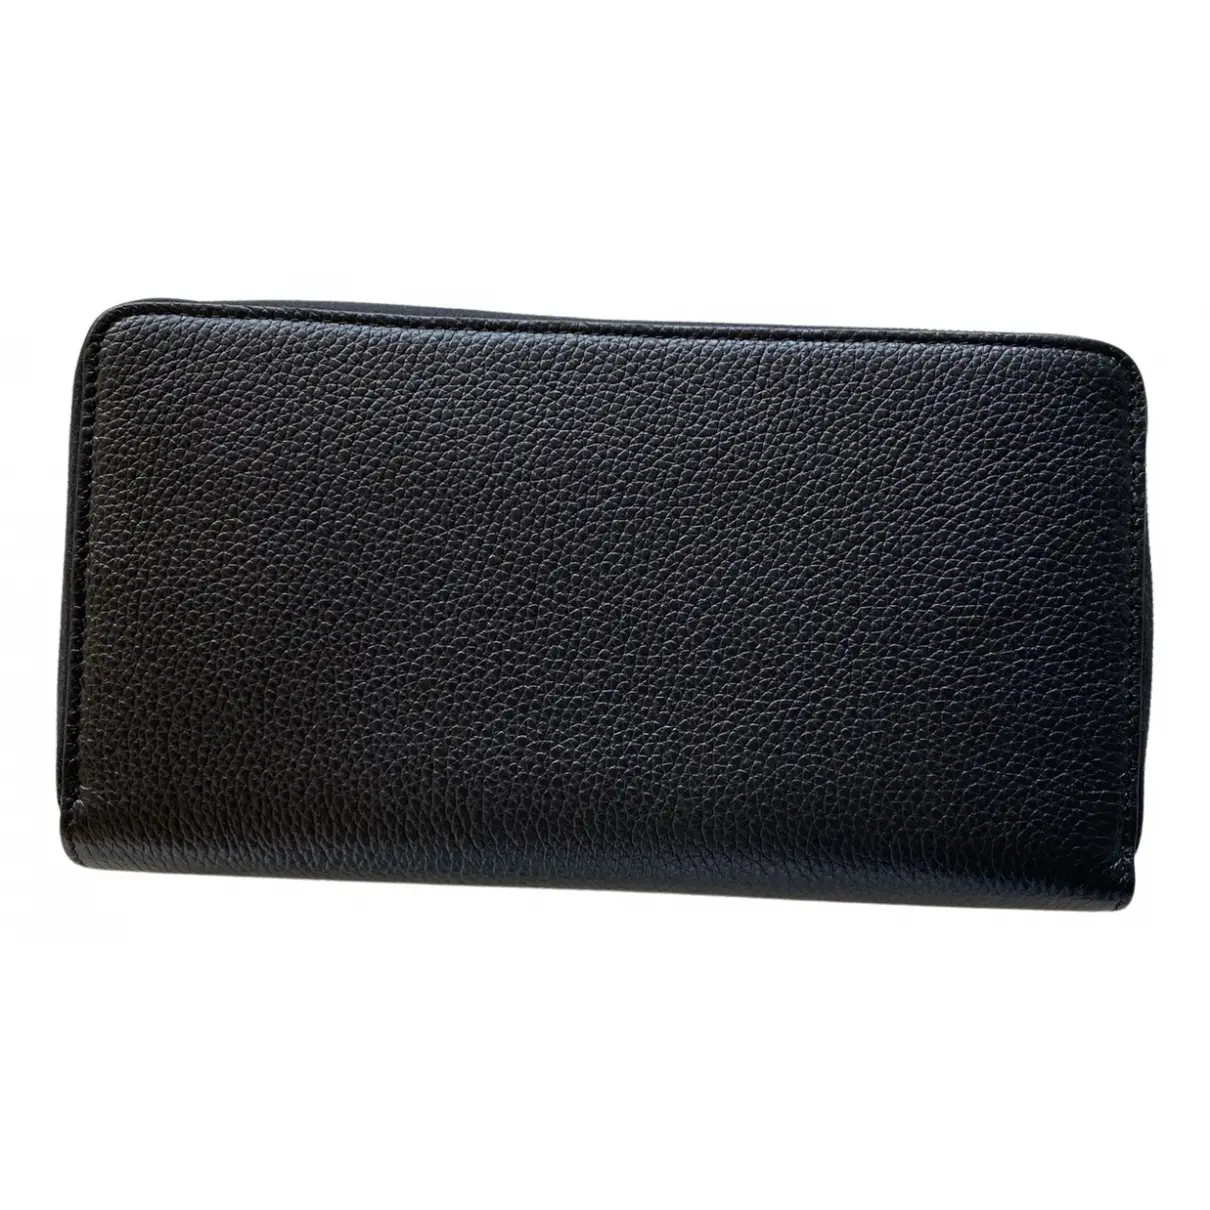 Buy Celine Leather wallet online